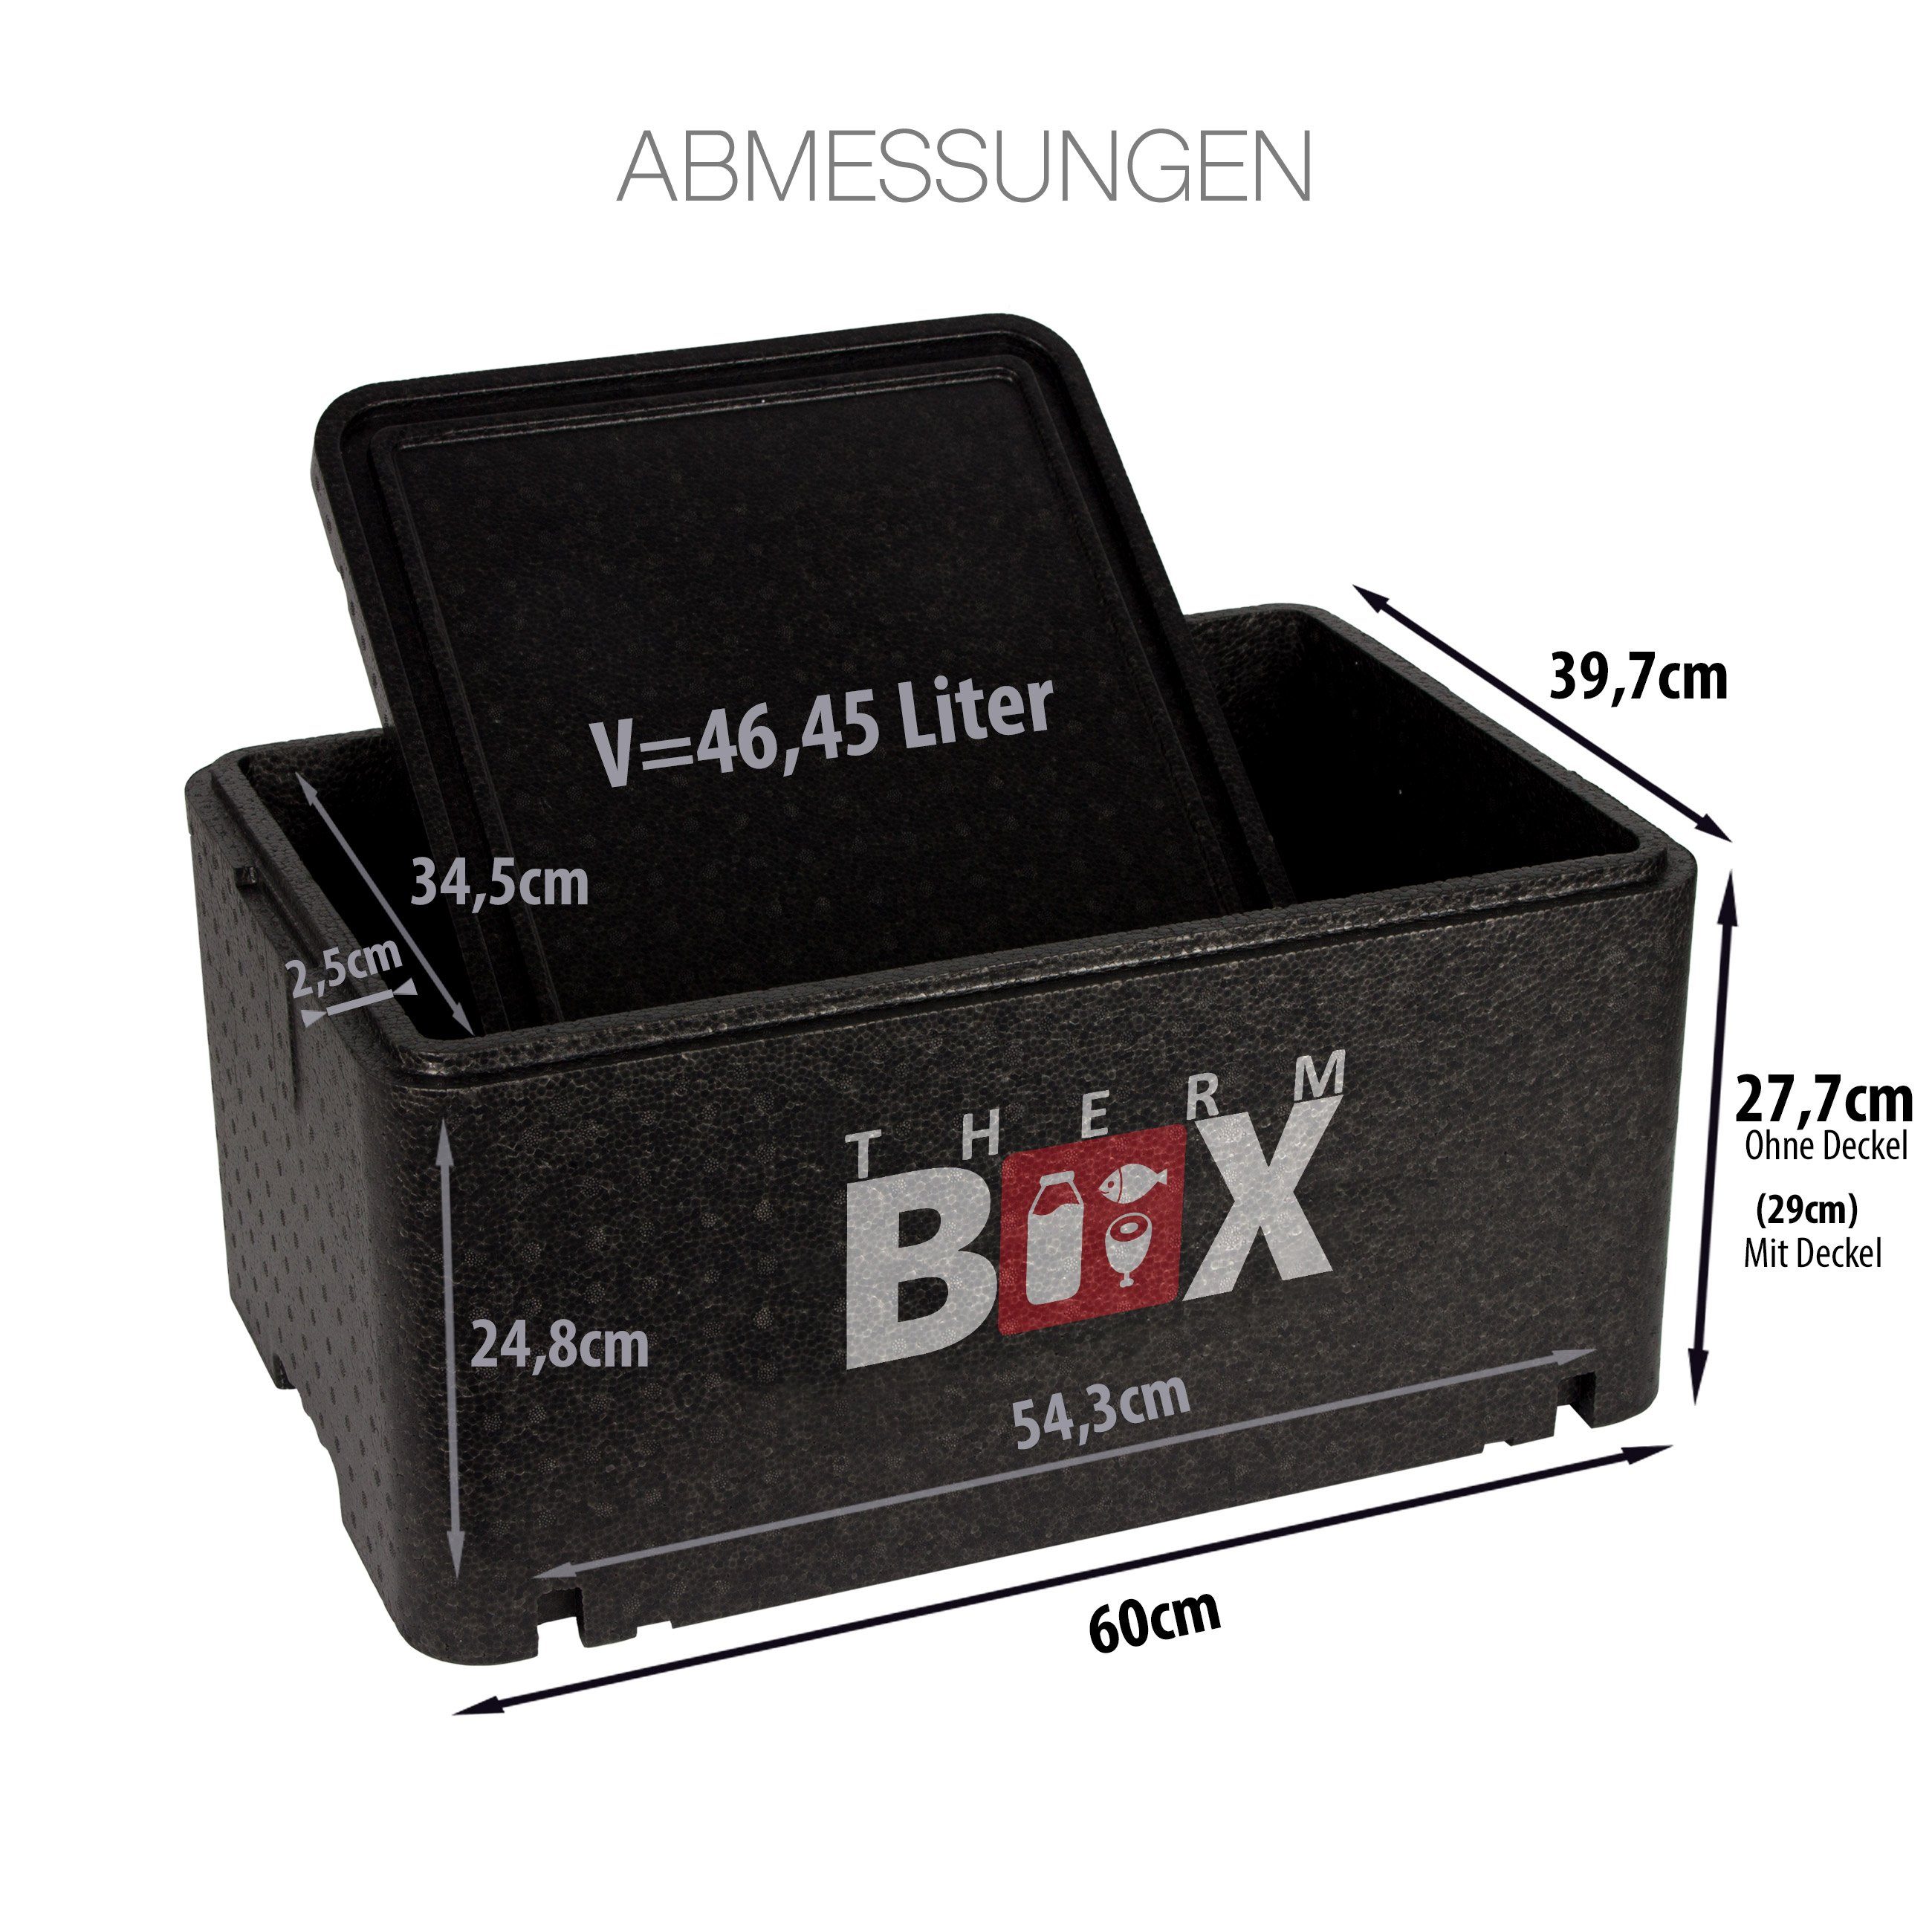 0-tlg., mit Kühlbox Thermobehälter Styropor-Piocelan, Thermobox (1, Styroporbox 2,5cm Wand: im Deckel Profibox Box Warmhaltebox Isolierbox Wiederverwendbar, THERM-BOX 54x34x24cm Karton), Innenmaß: 46,5L GN1